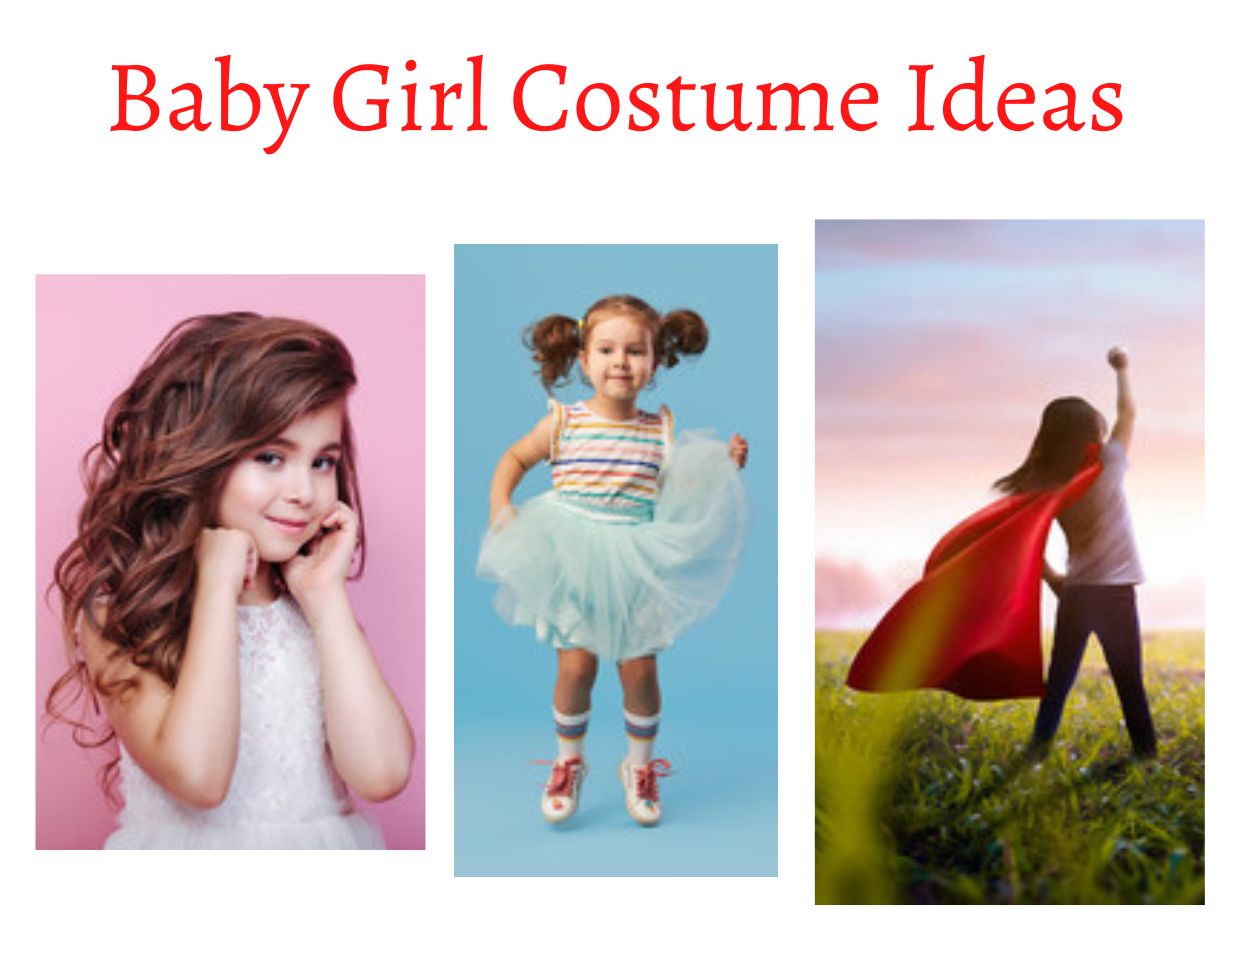 Baby-Girl-Costume-Ideas